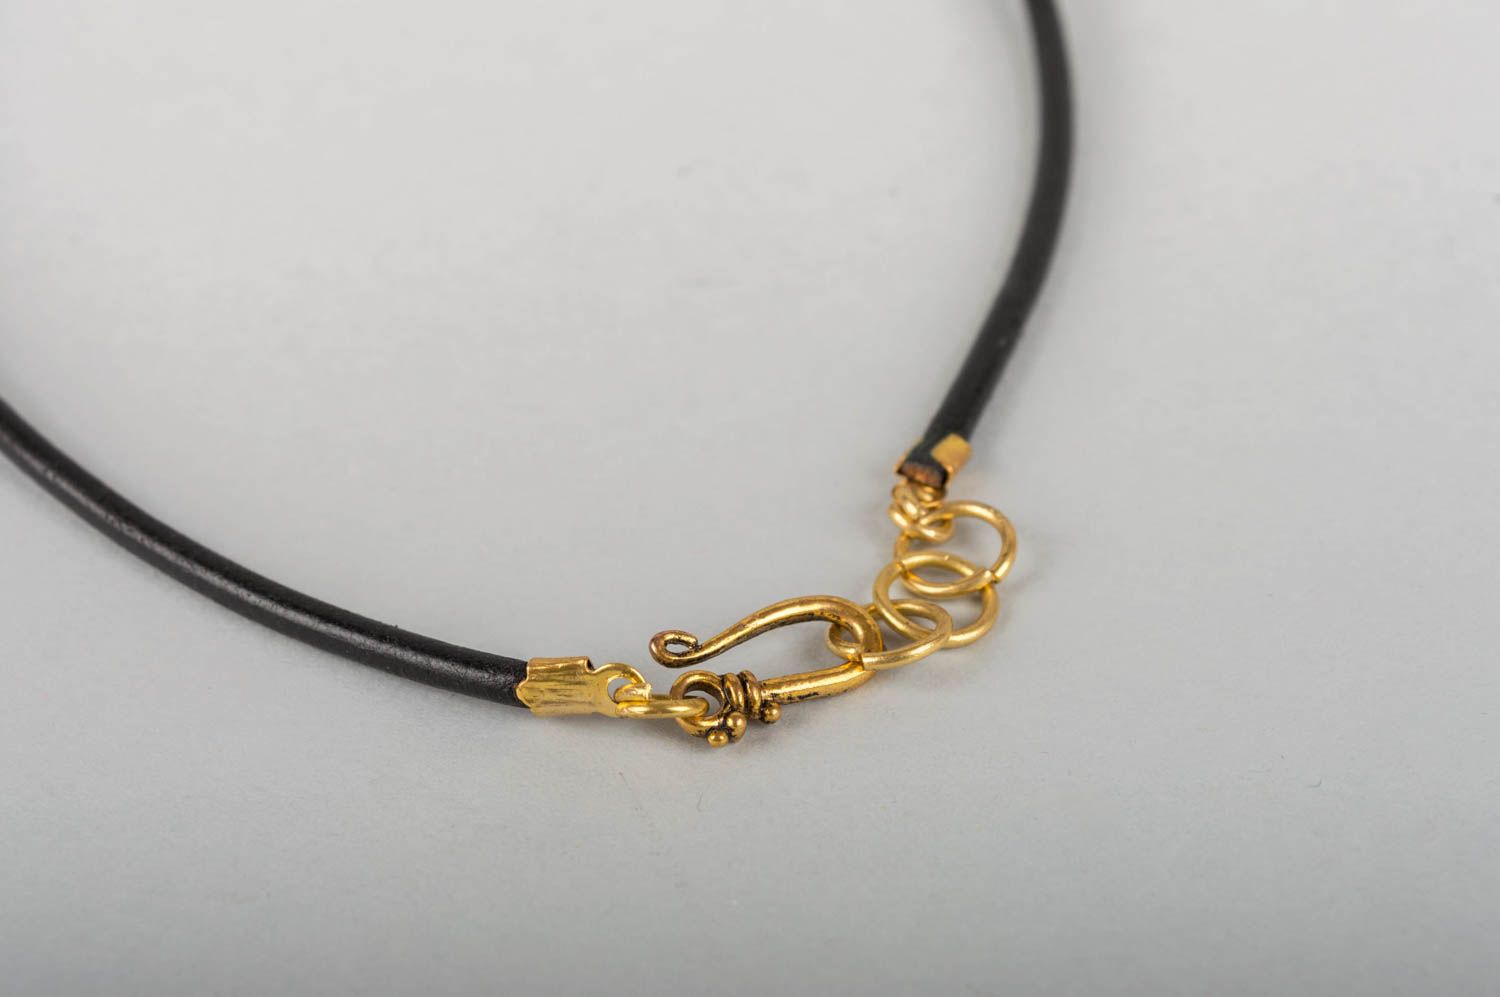 Beautiful stylish handmade neck pendant with natural stone on leather cord photo 5